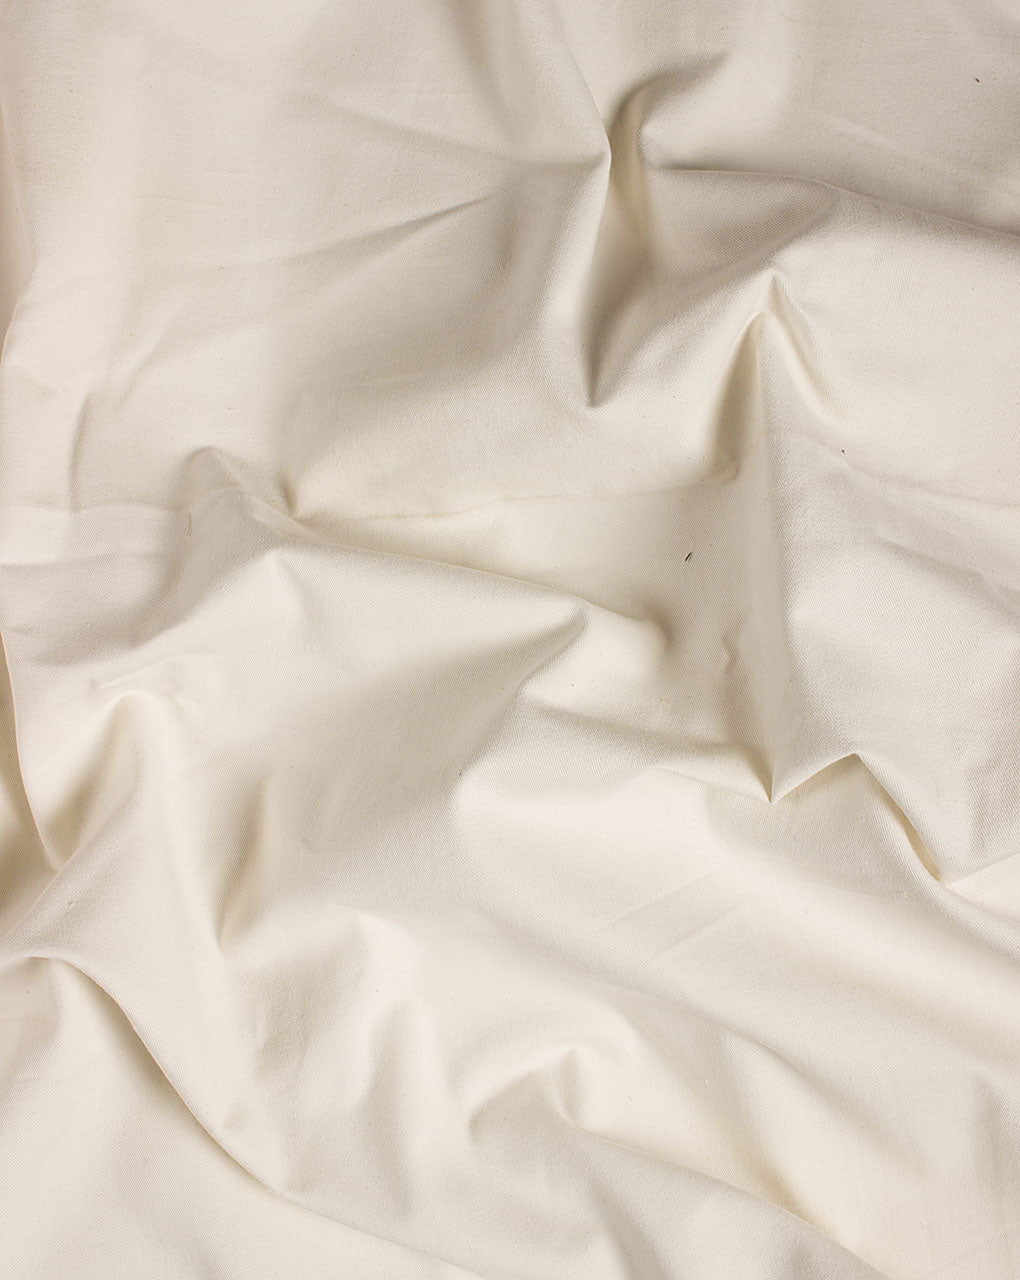 16s x 12s (108 x 56) Cotton Twill Fabric